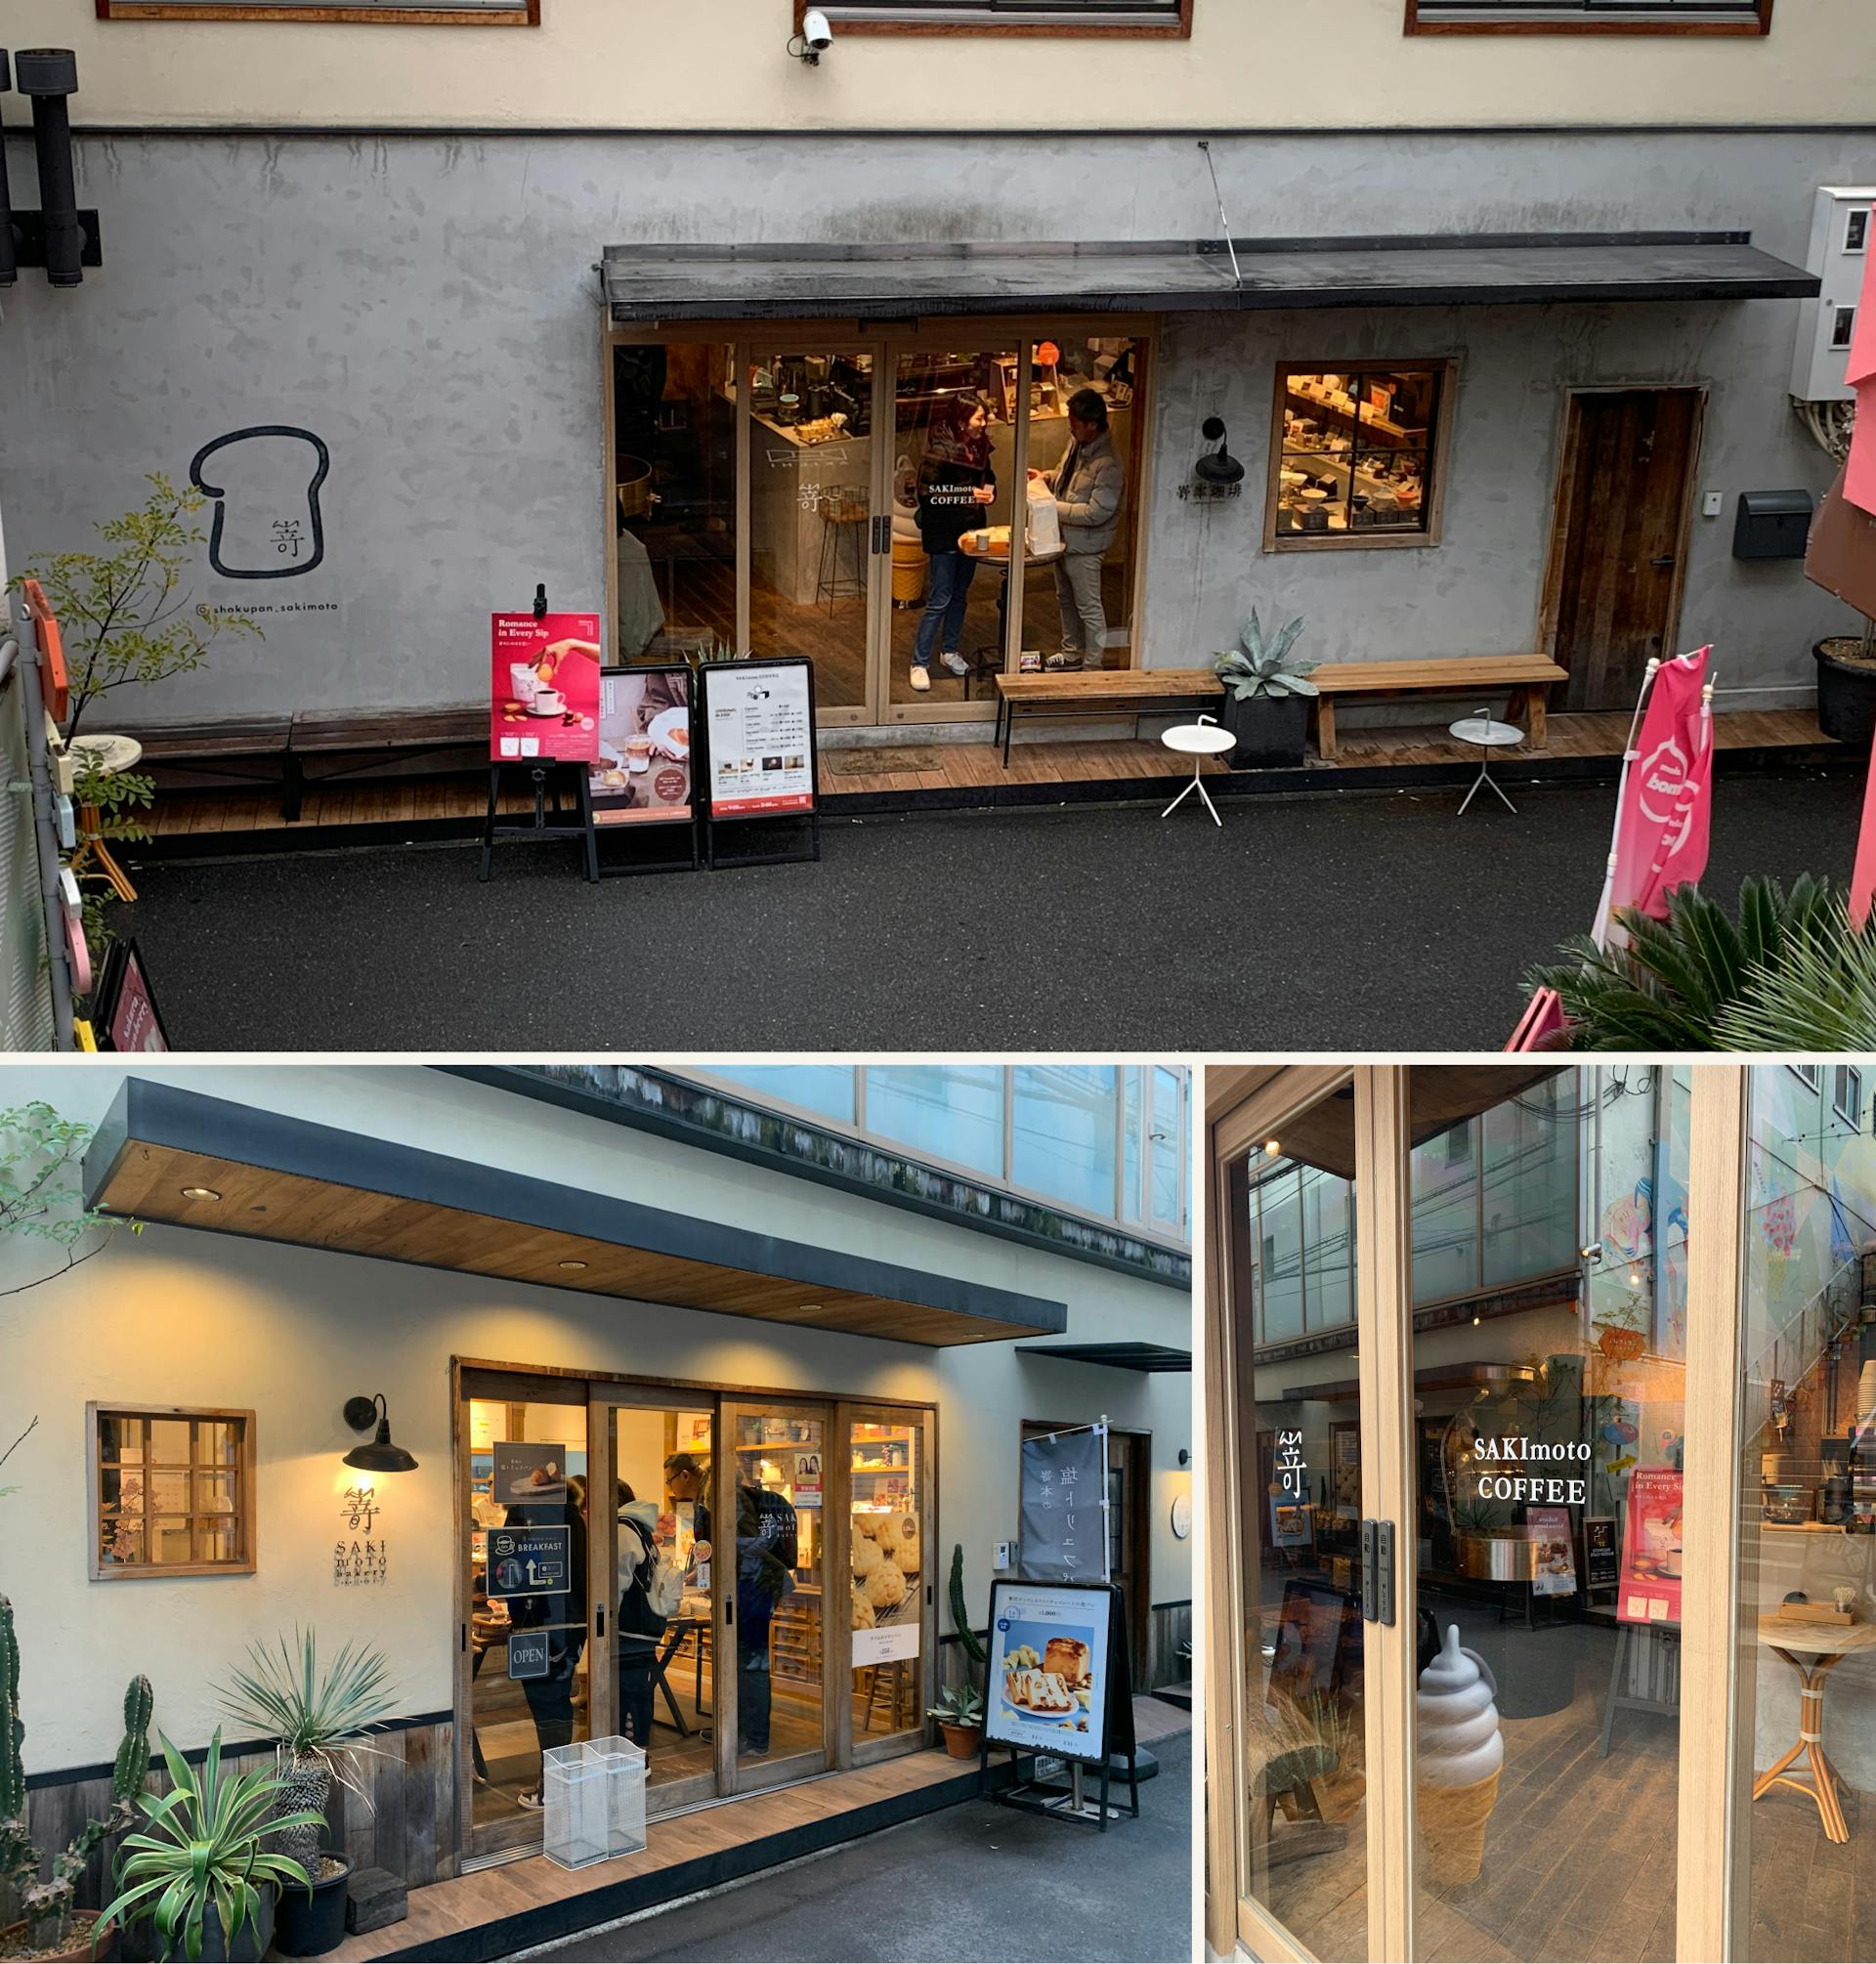 Cafe and bakery with a garasu-do